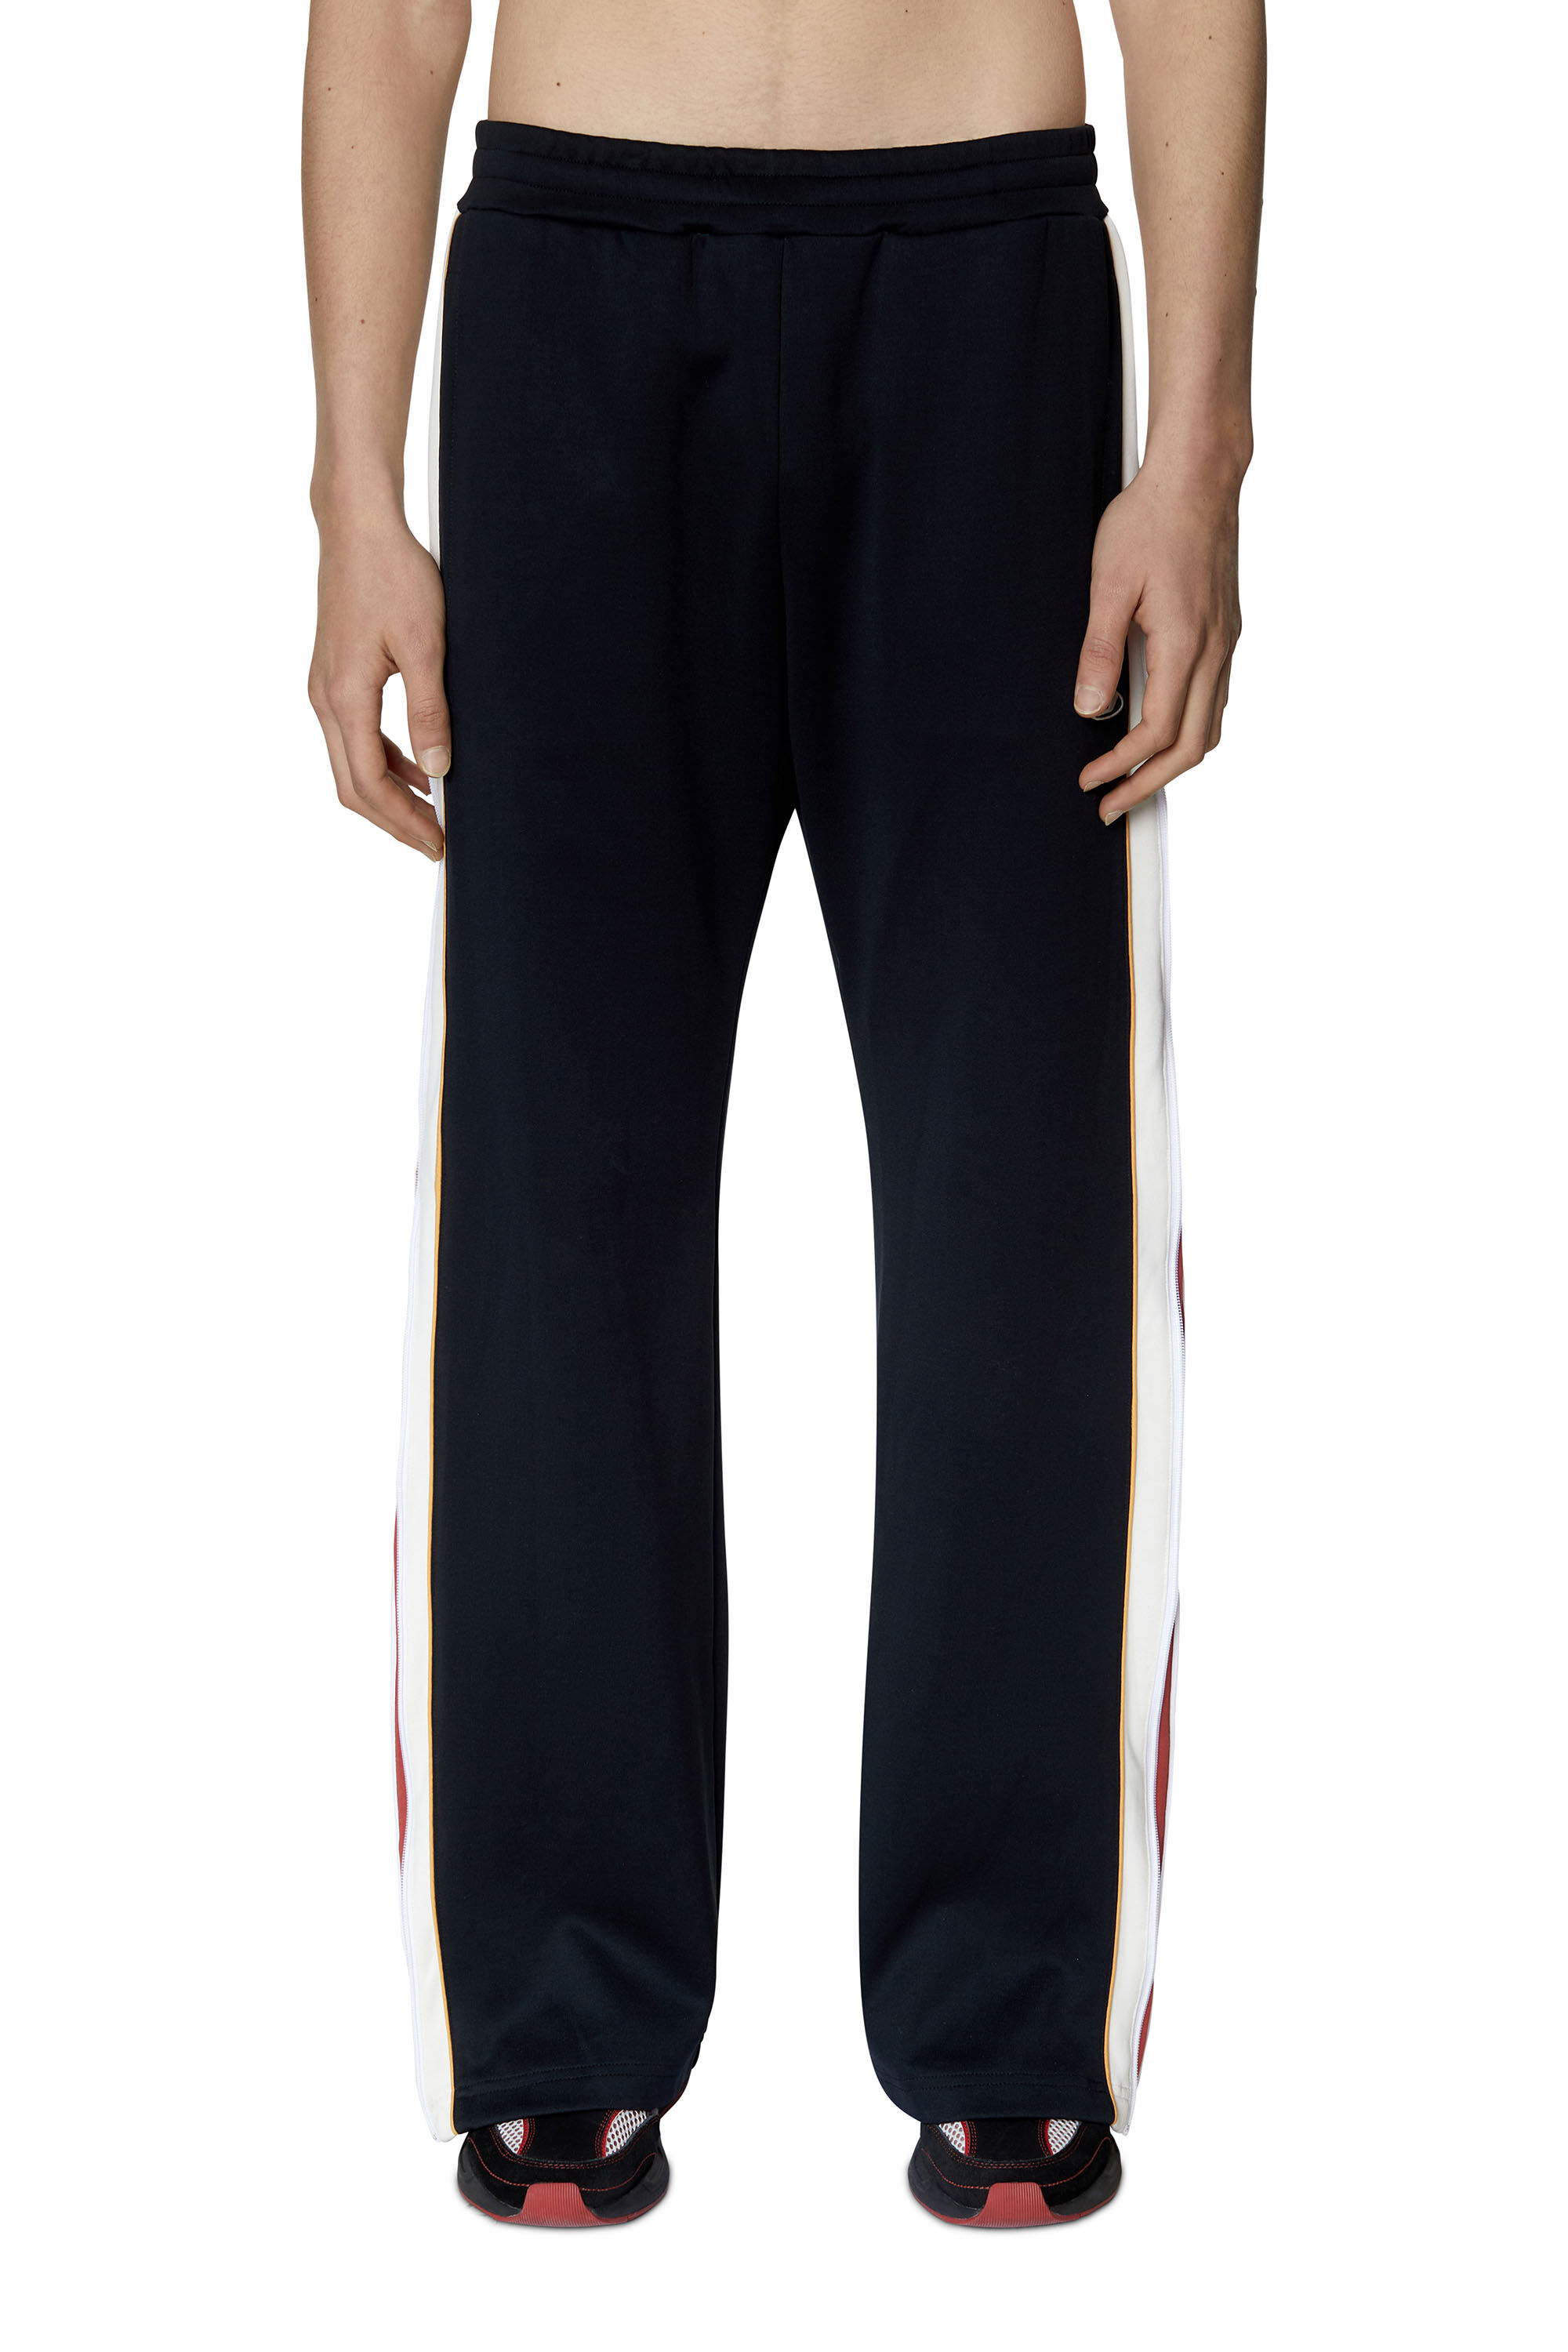 P-ZAMPOCK Man: Fashion Show sweatpants with side zips | Diesel